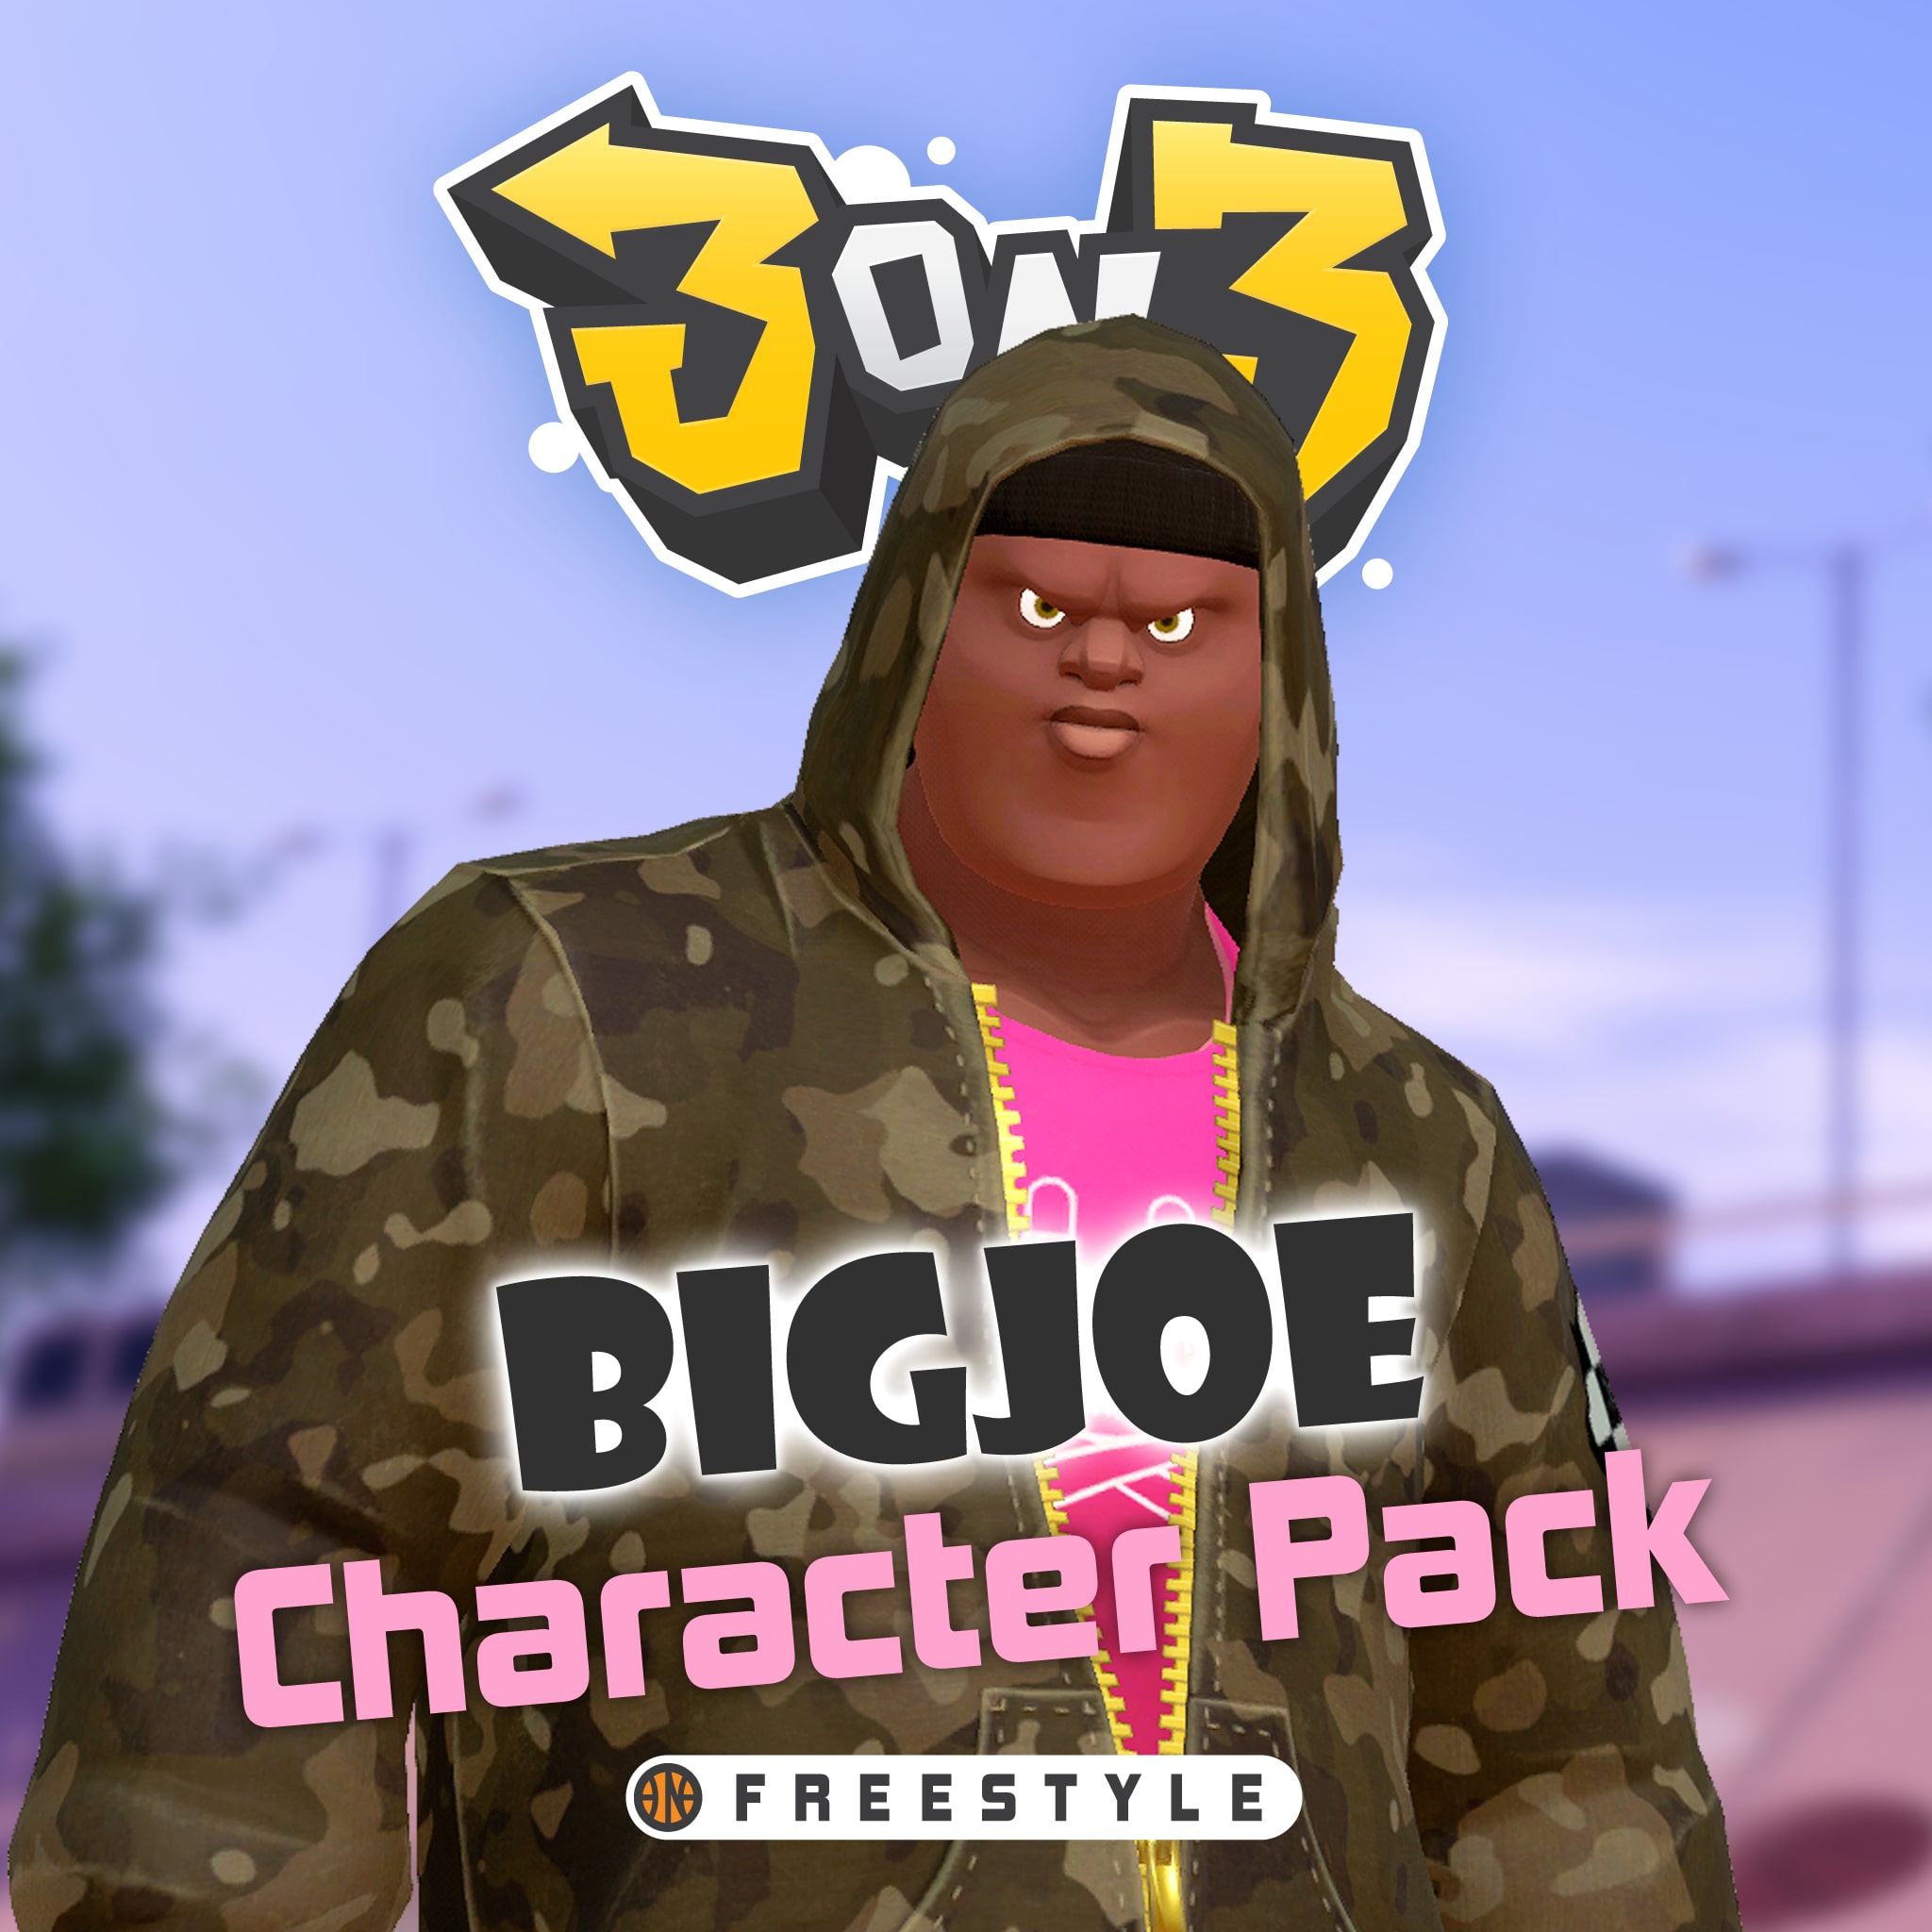 3on3 FreeStyle – Big Joe Character Pack